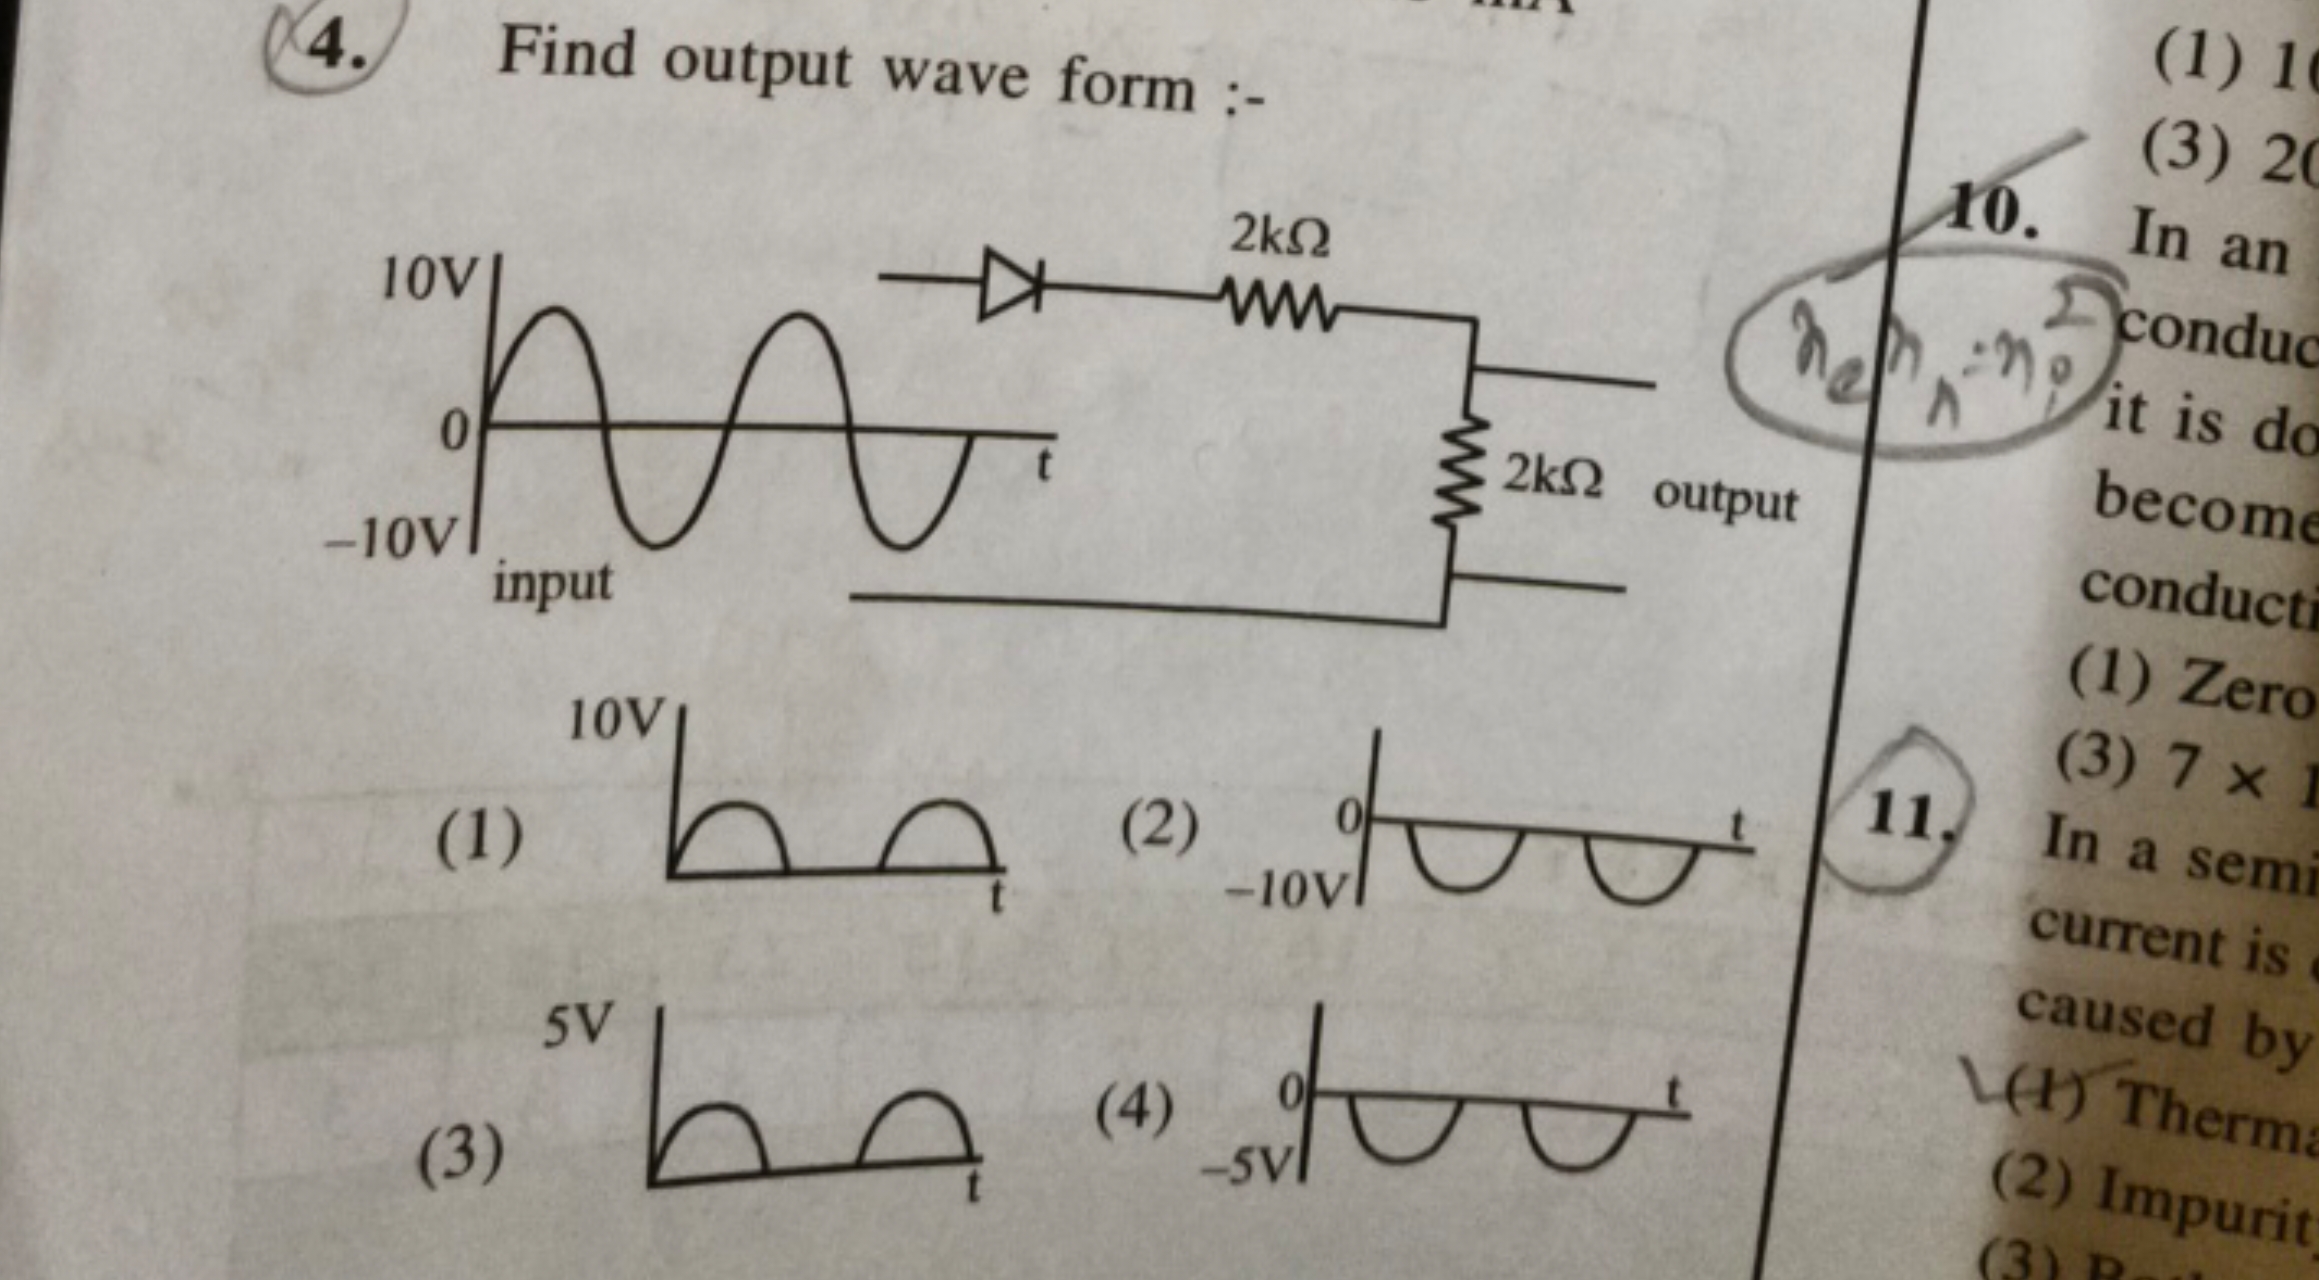 4. Find output wave form :-
(1) 11
(1)
(2)
11.
(1) Zero
(3) 7× it is d